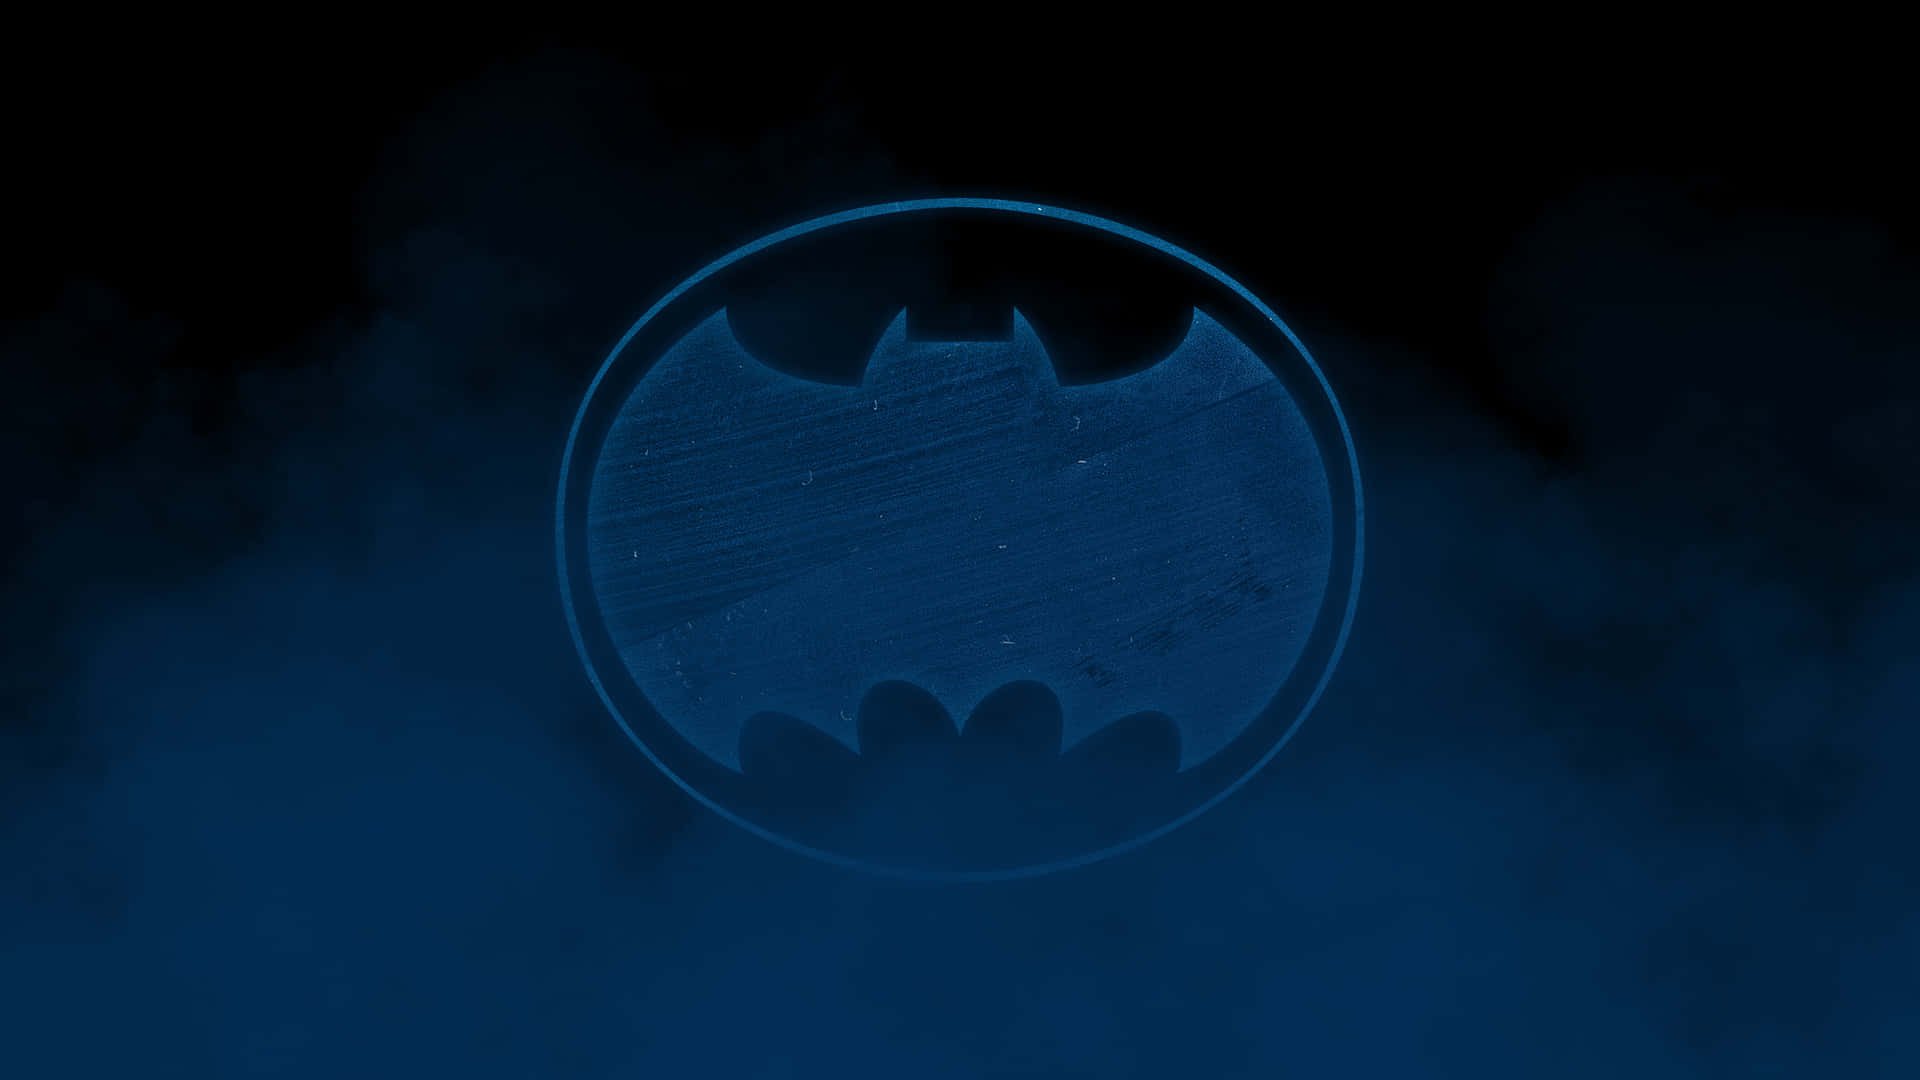 Batman - The Dark Knight Returns in Action Wallpaper